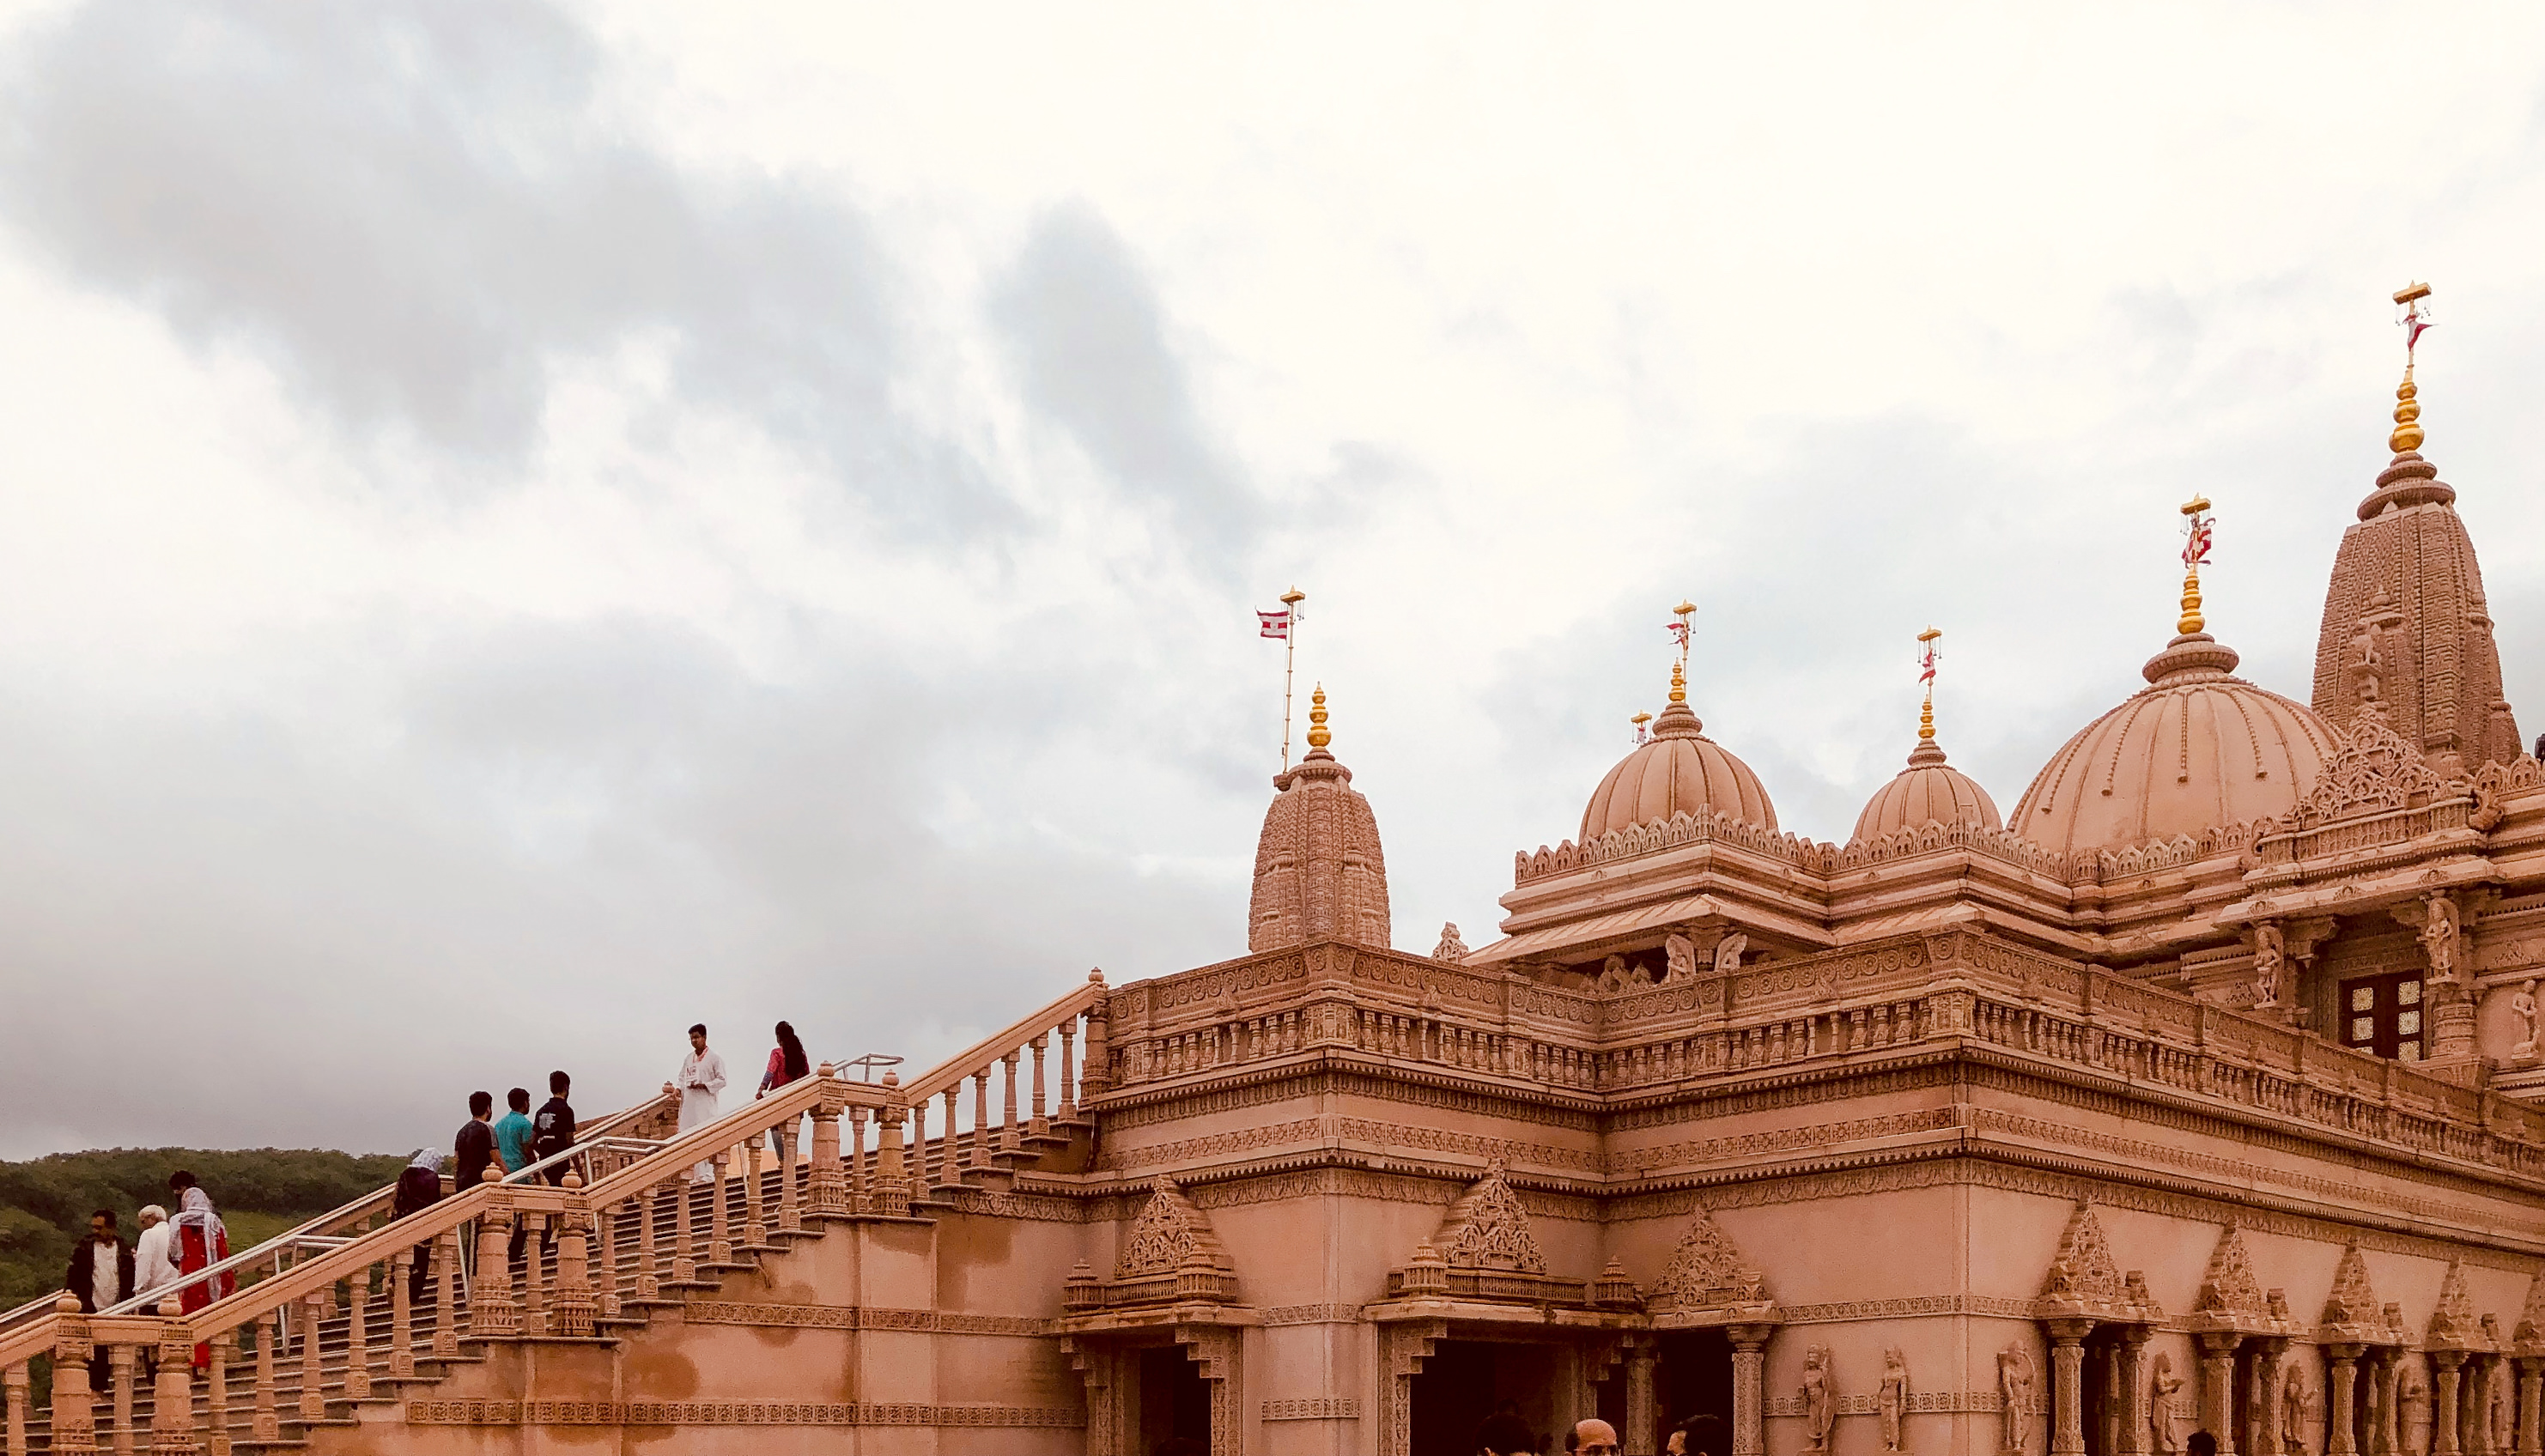 A BAPS Swaminarayan temple in Pune. Photo taken by Pranati Parikh.